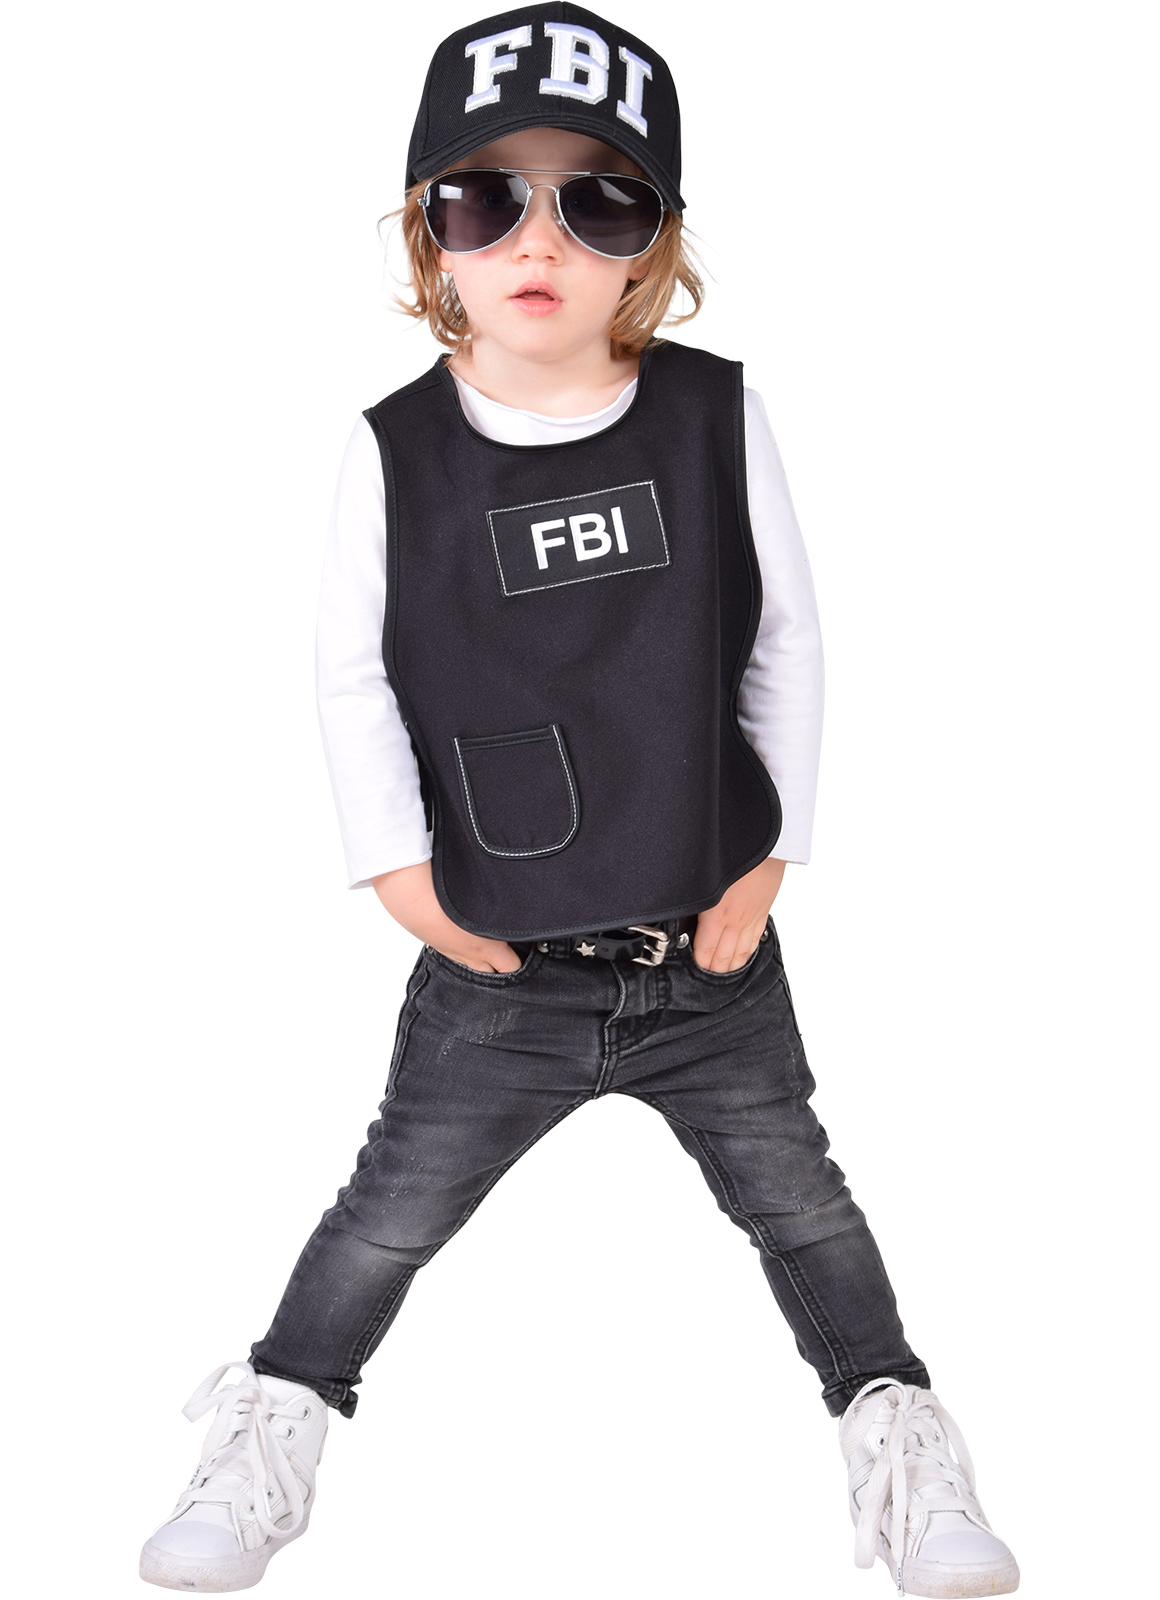 Hesje FBI Baby One Size